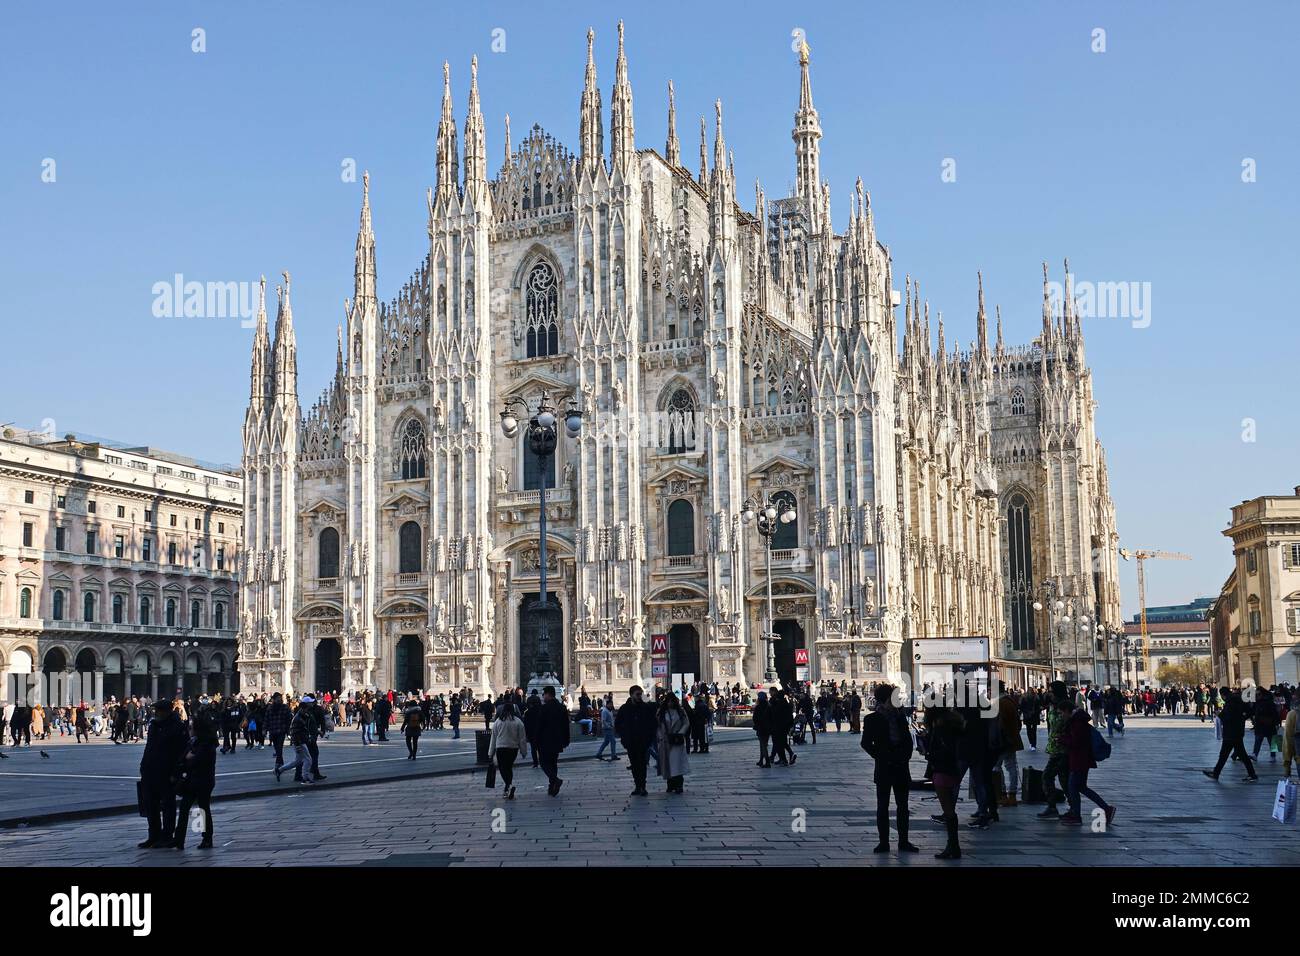 Panorama der Piazza del Duomo, Hauptplatz von Mailand, Italien - Januar 2023 Stockfoto